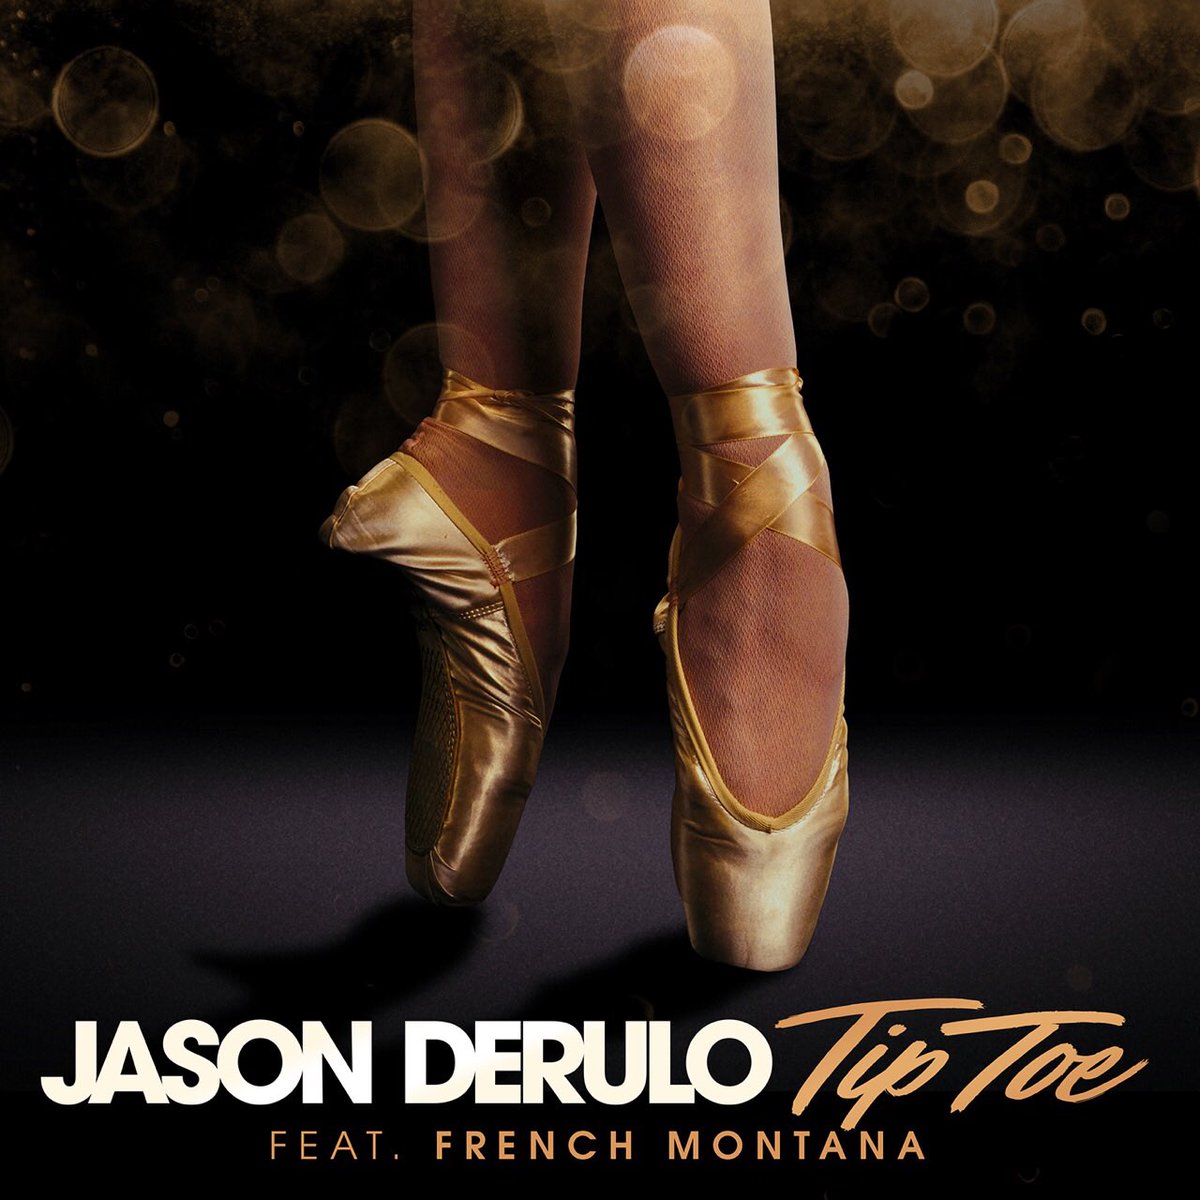 Jason Derulo - Tip Toe feat. French Montana